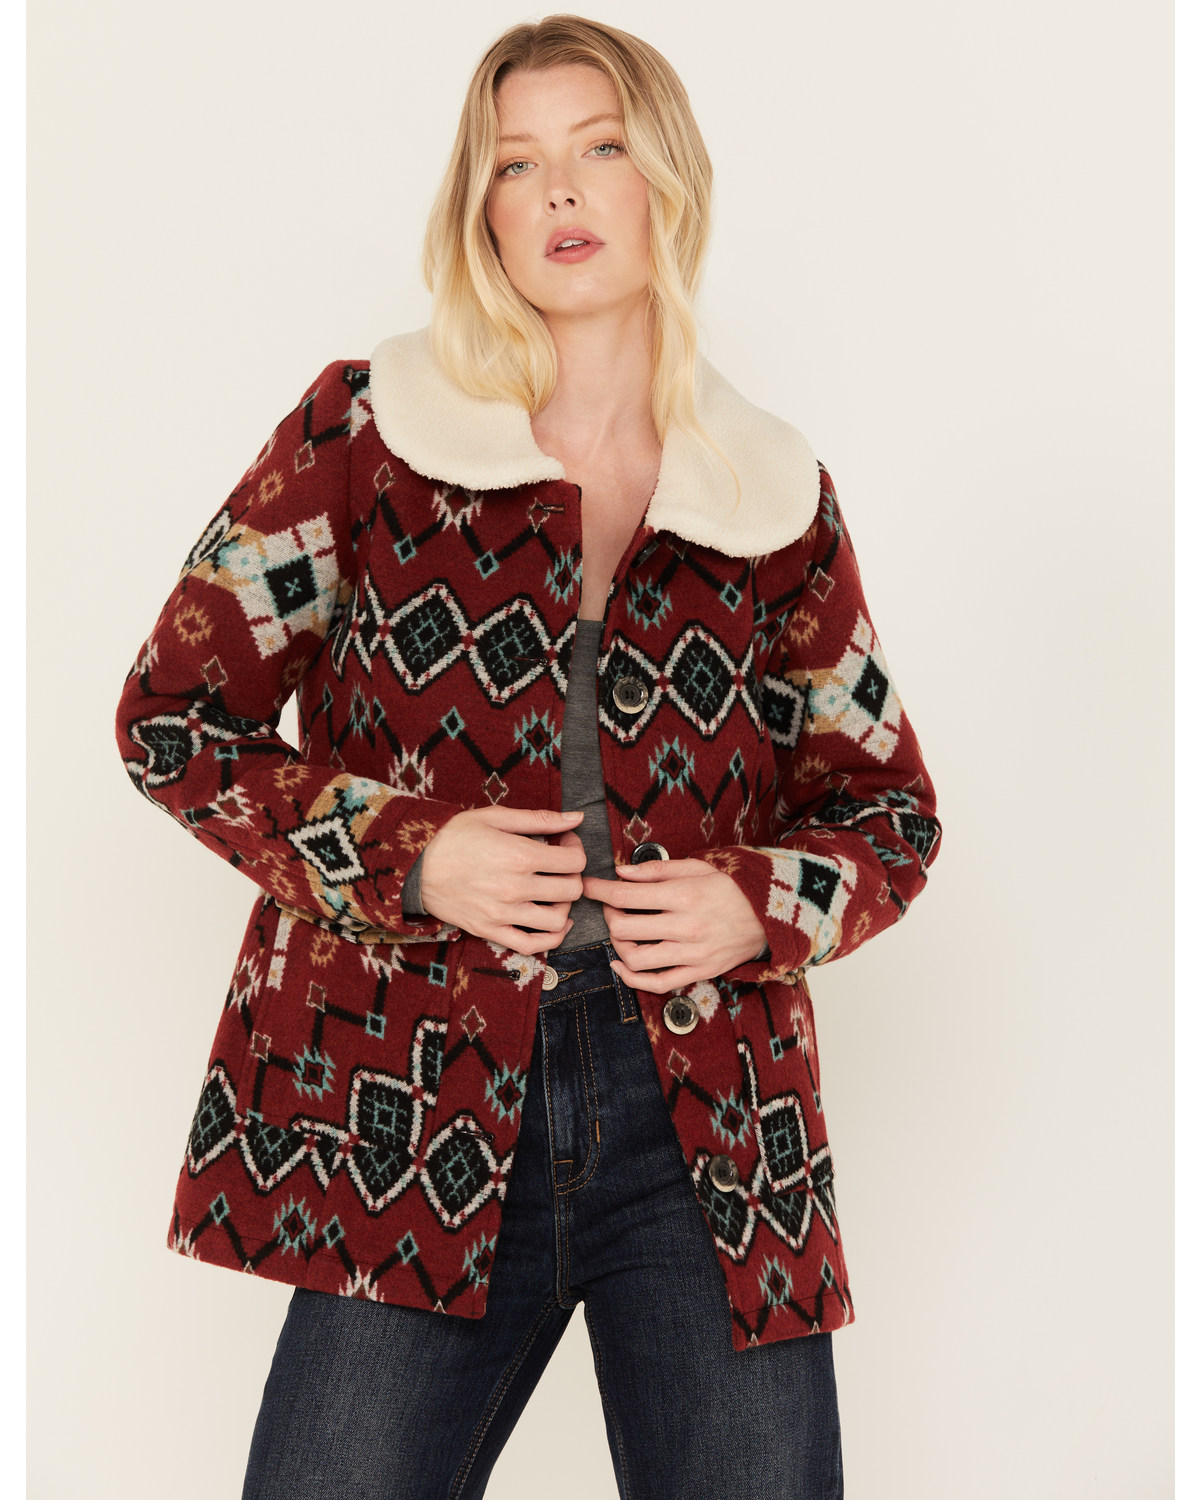 Powder River Outfitters Women's Southwestern Print Jacquard Wool Berber Coat